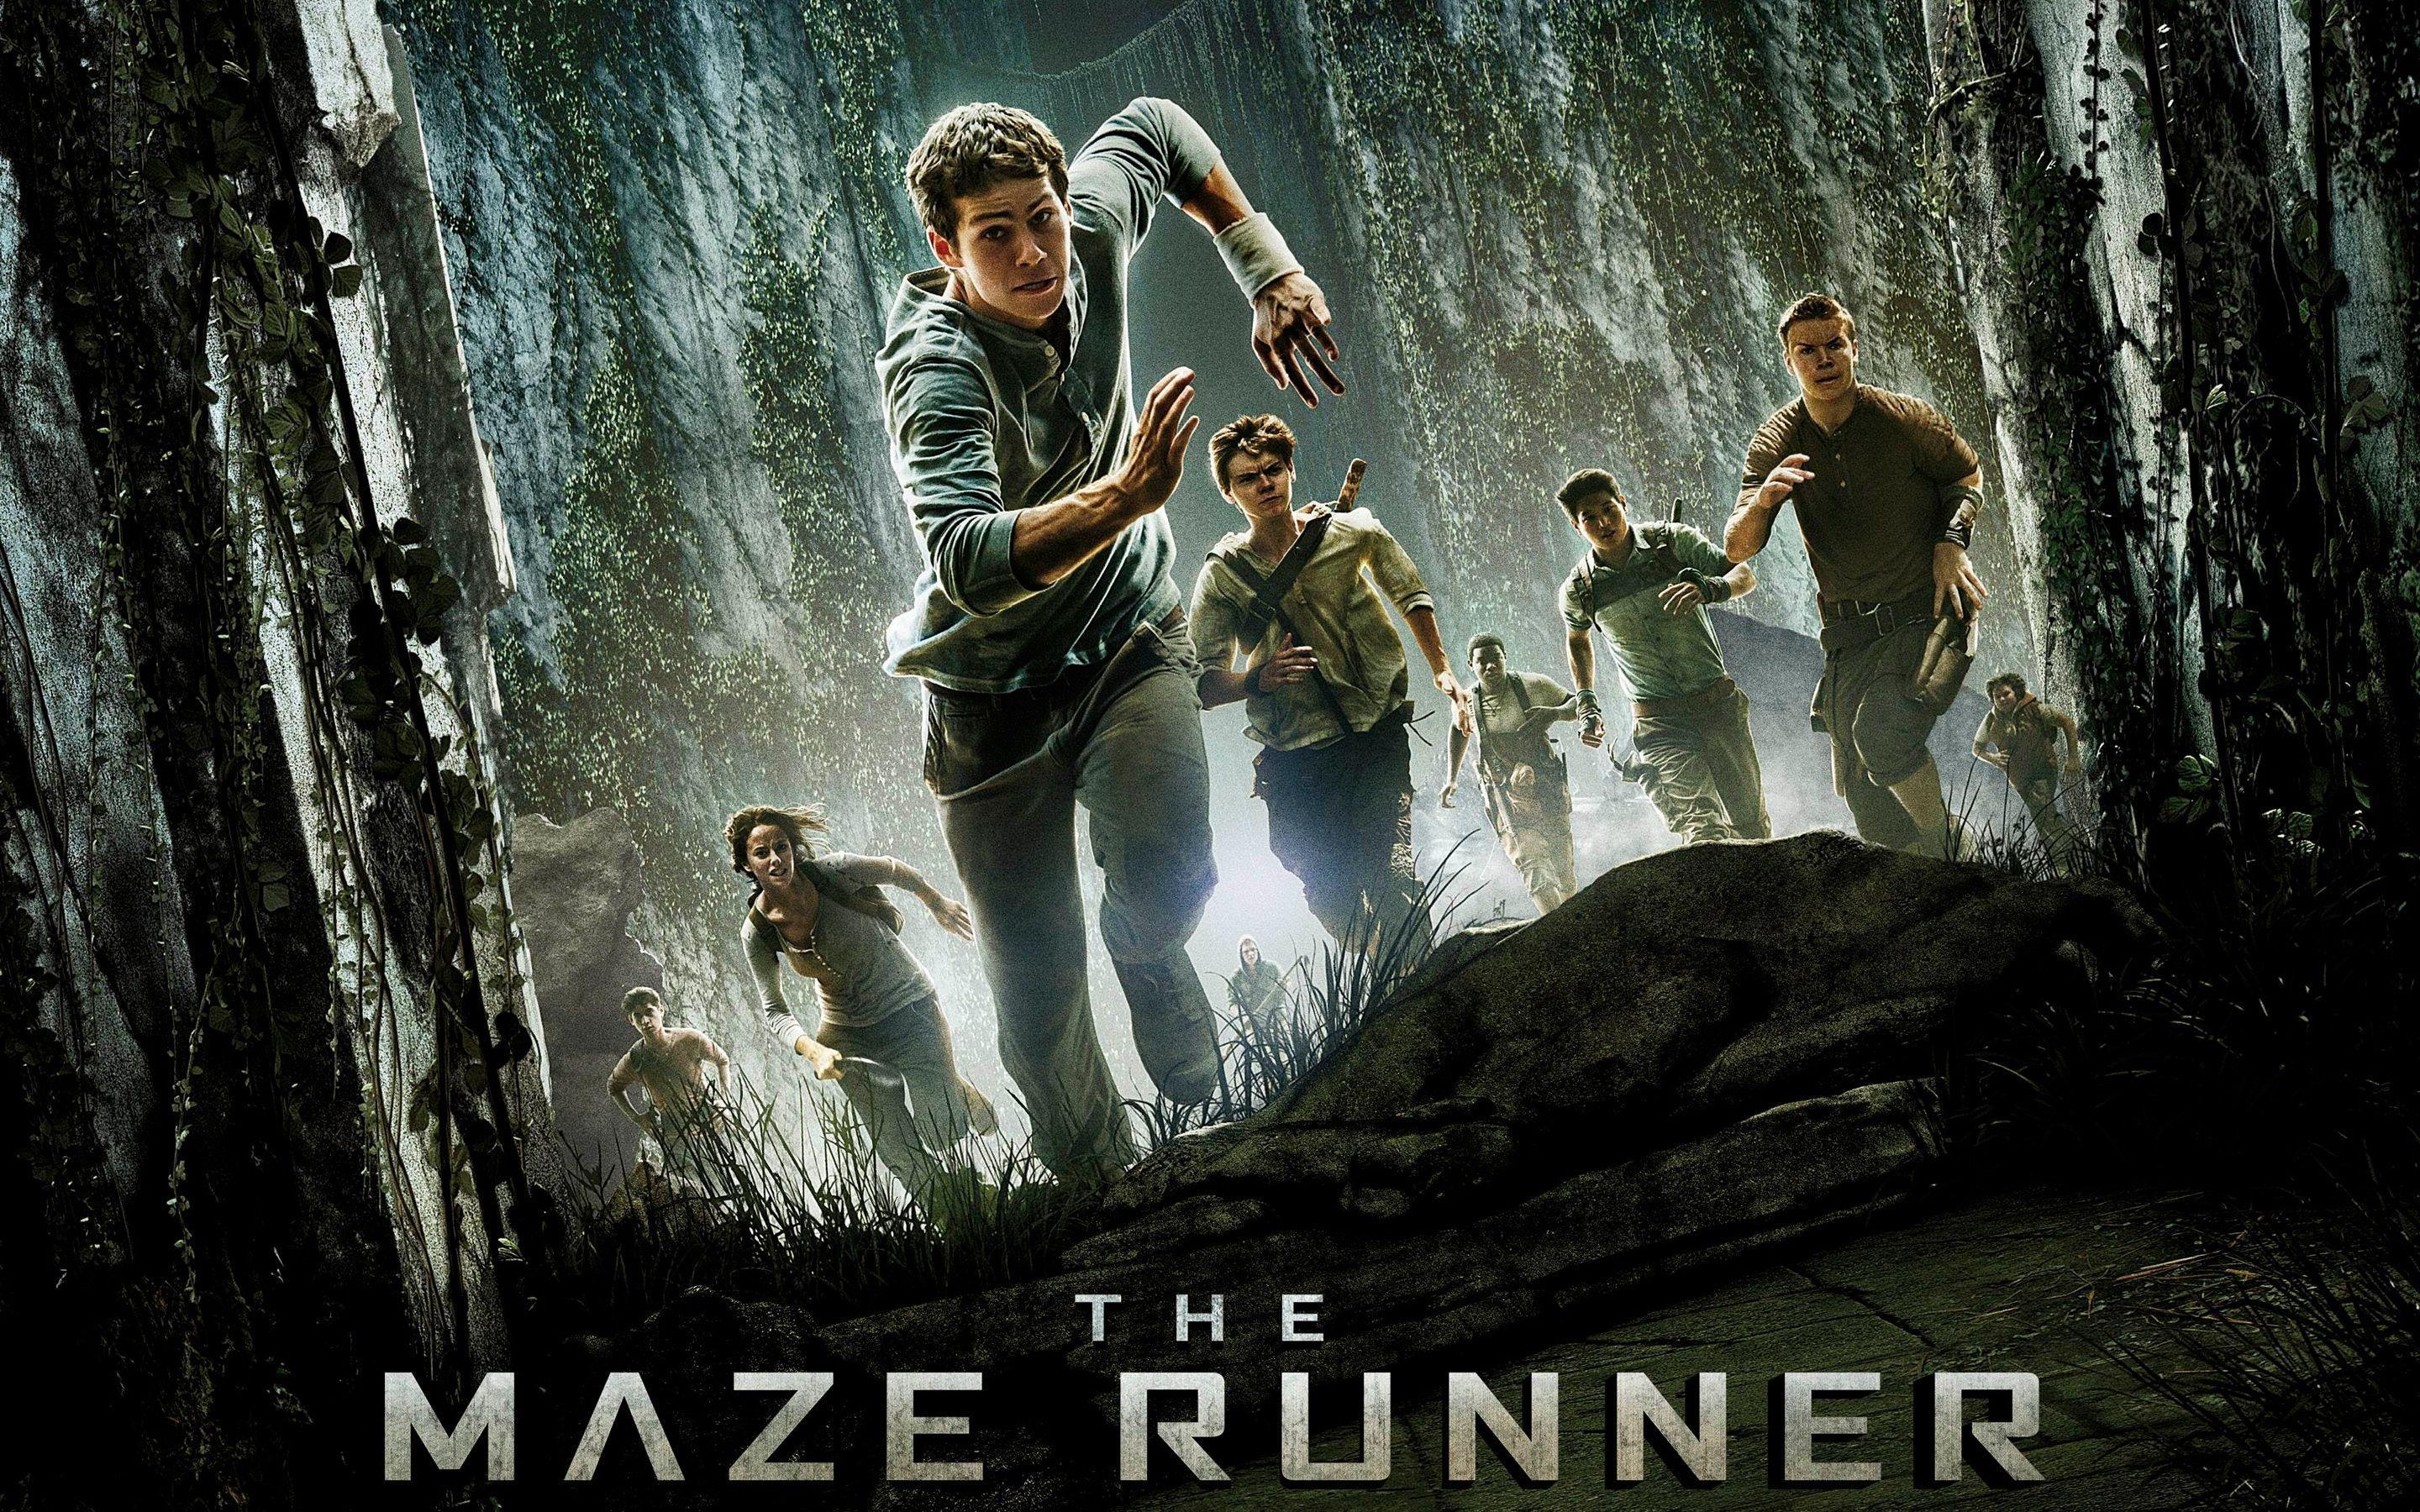 Dylan O'Brien Movies, Maze Runner universe, Top-rated backgrounds, Fan-favorite franchise, 2880x1800 HD Desktop